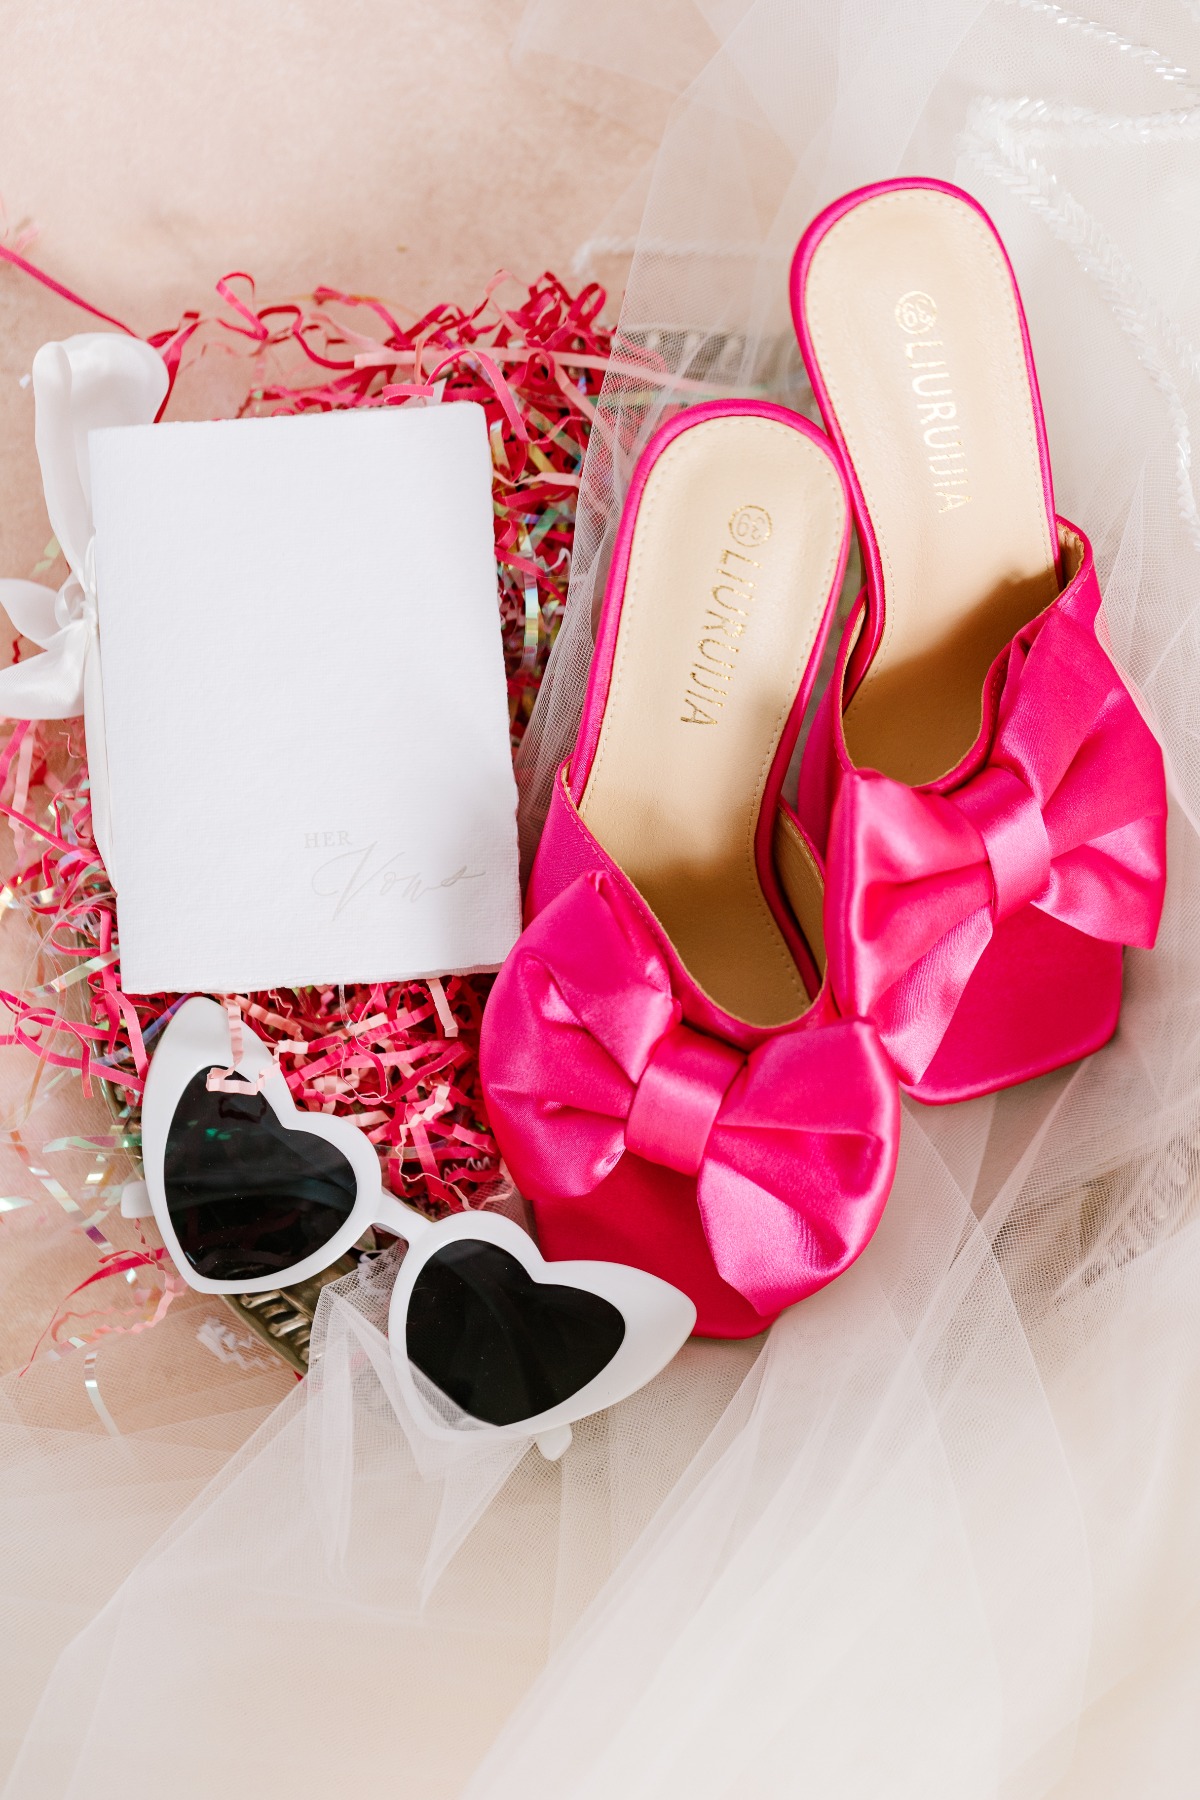 White heart shaped sunglasses for modern bride reception 